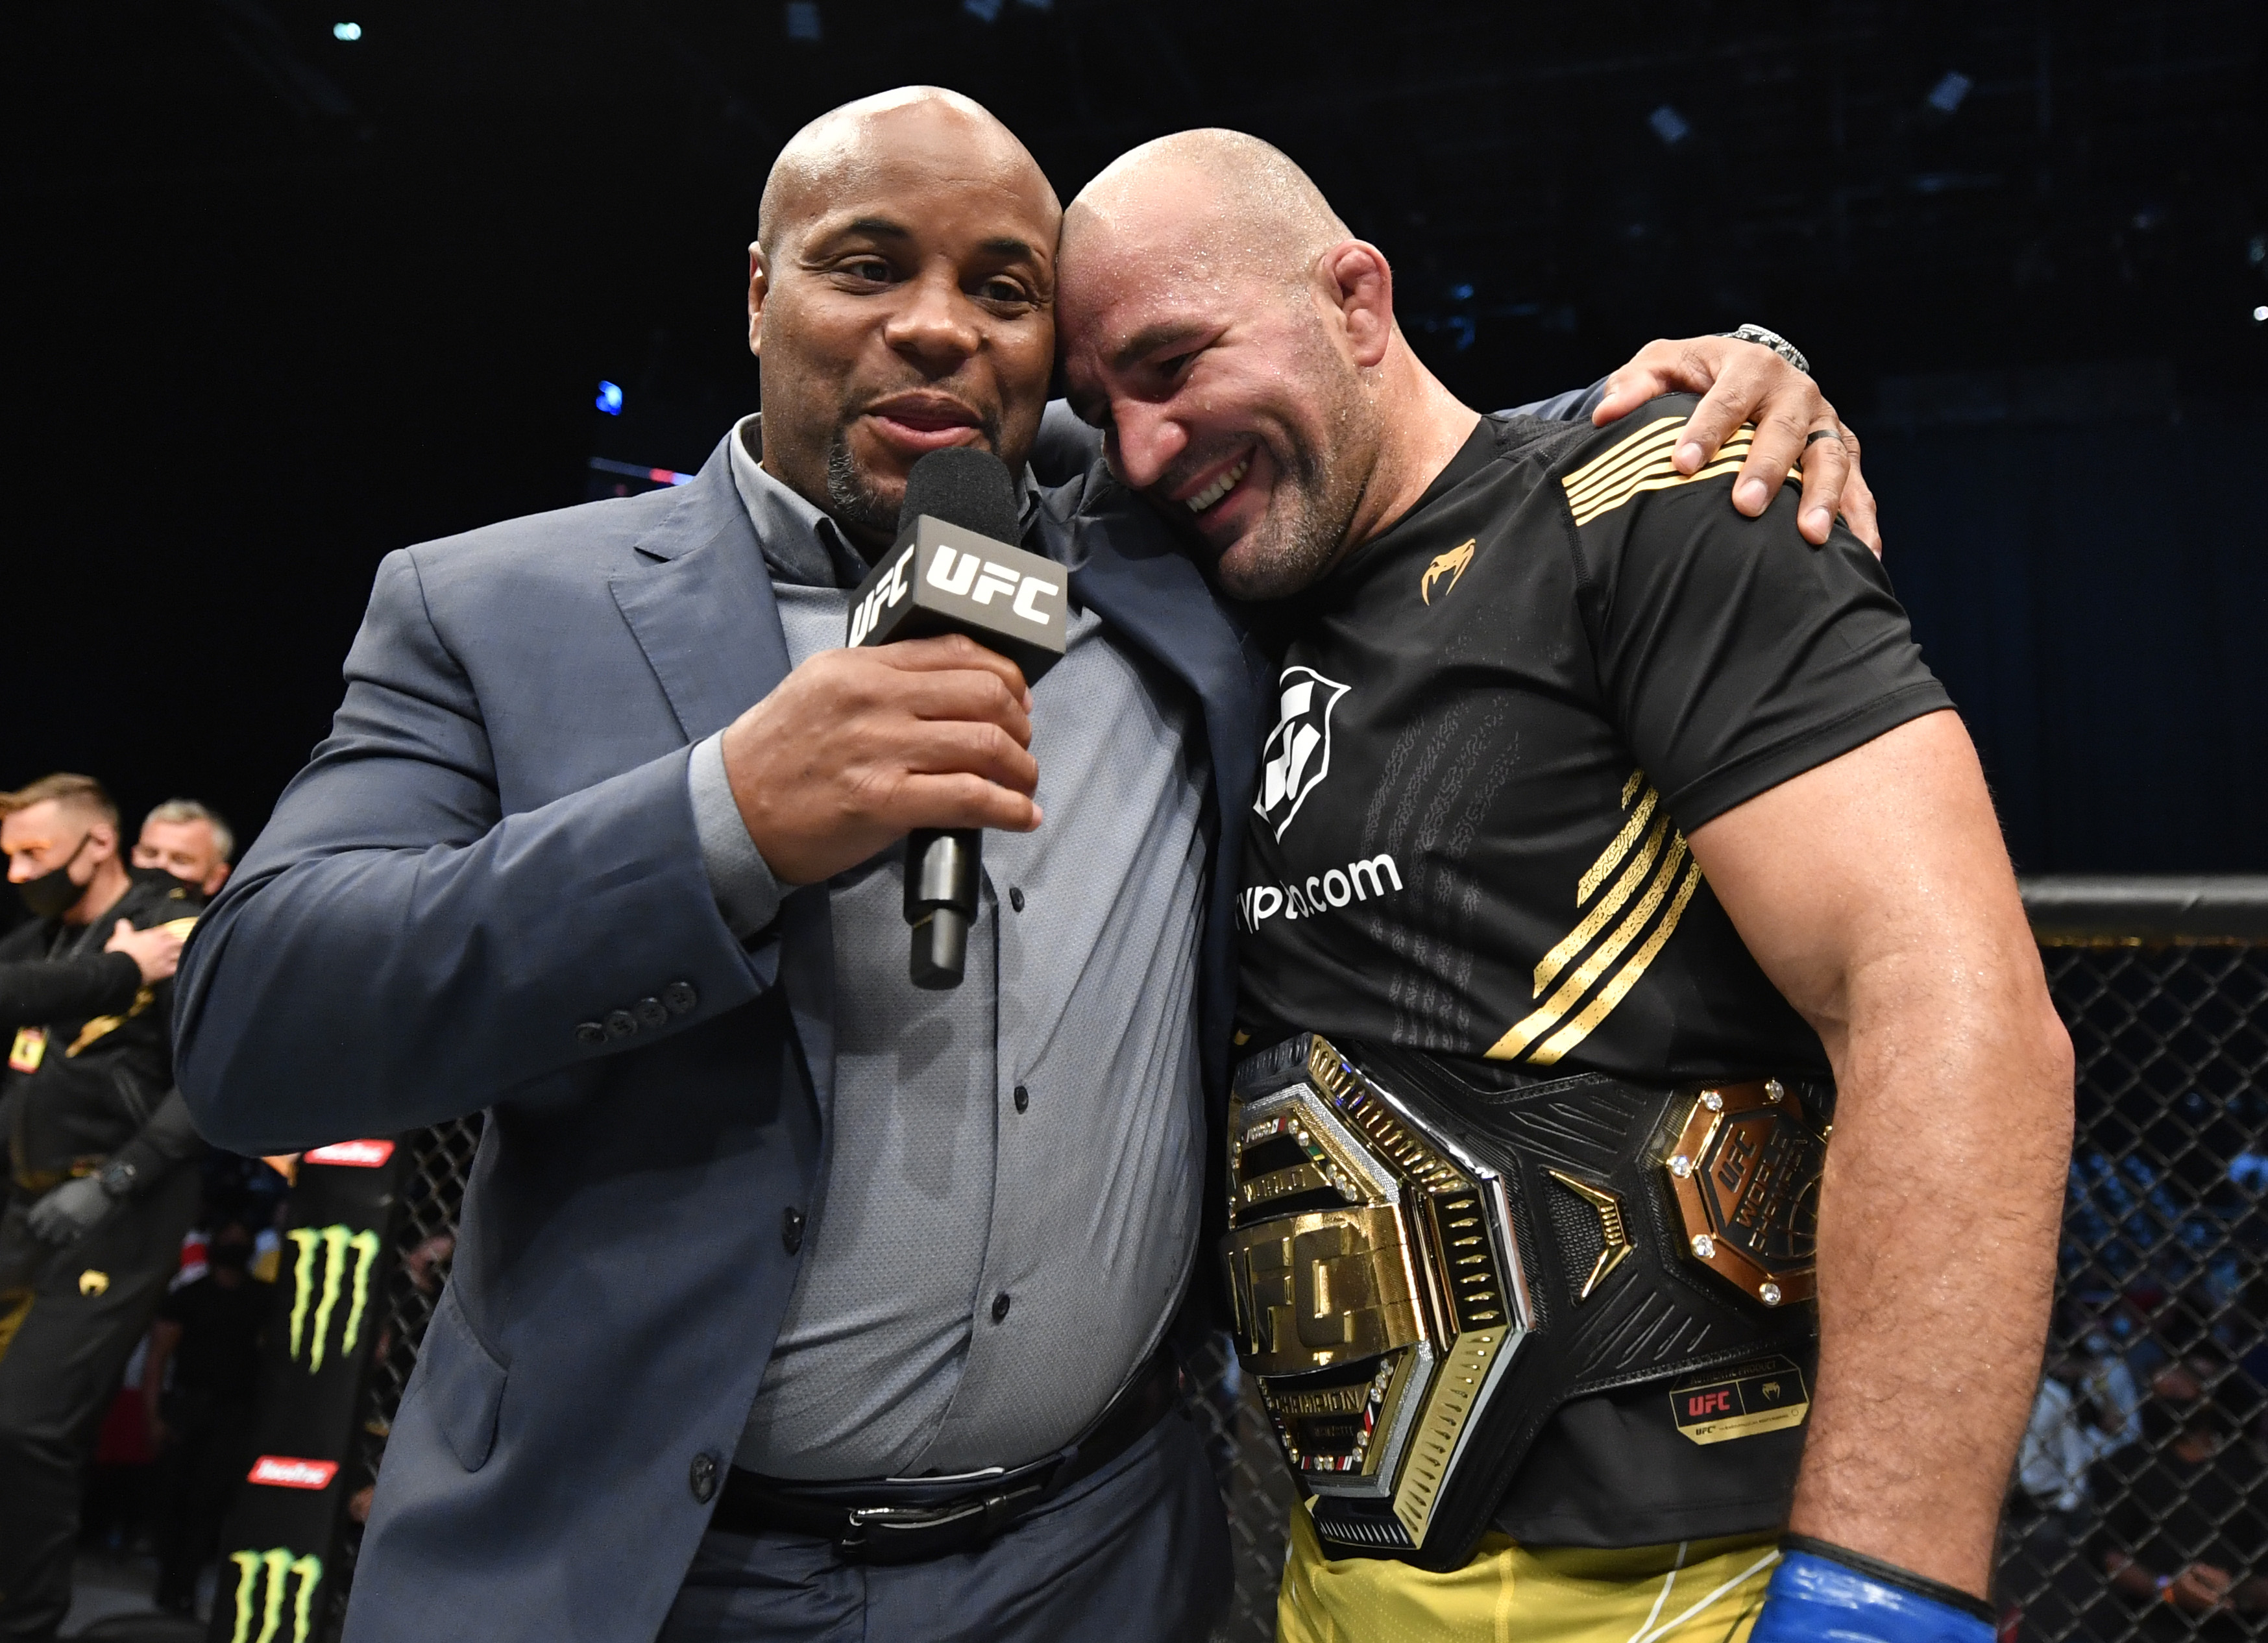 Glover Teixeira choked out Jan Blachowicz to win the UFC’s light heavyweight belt 